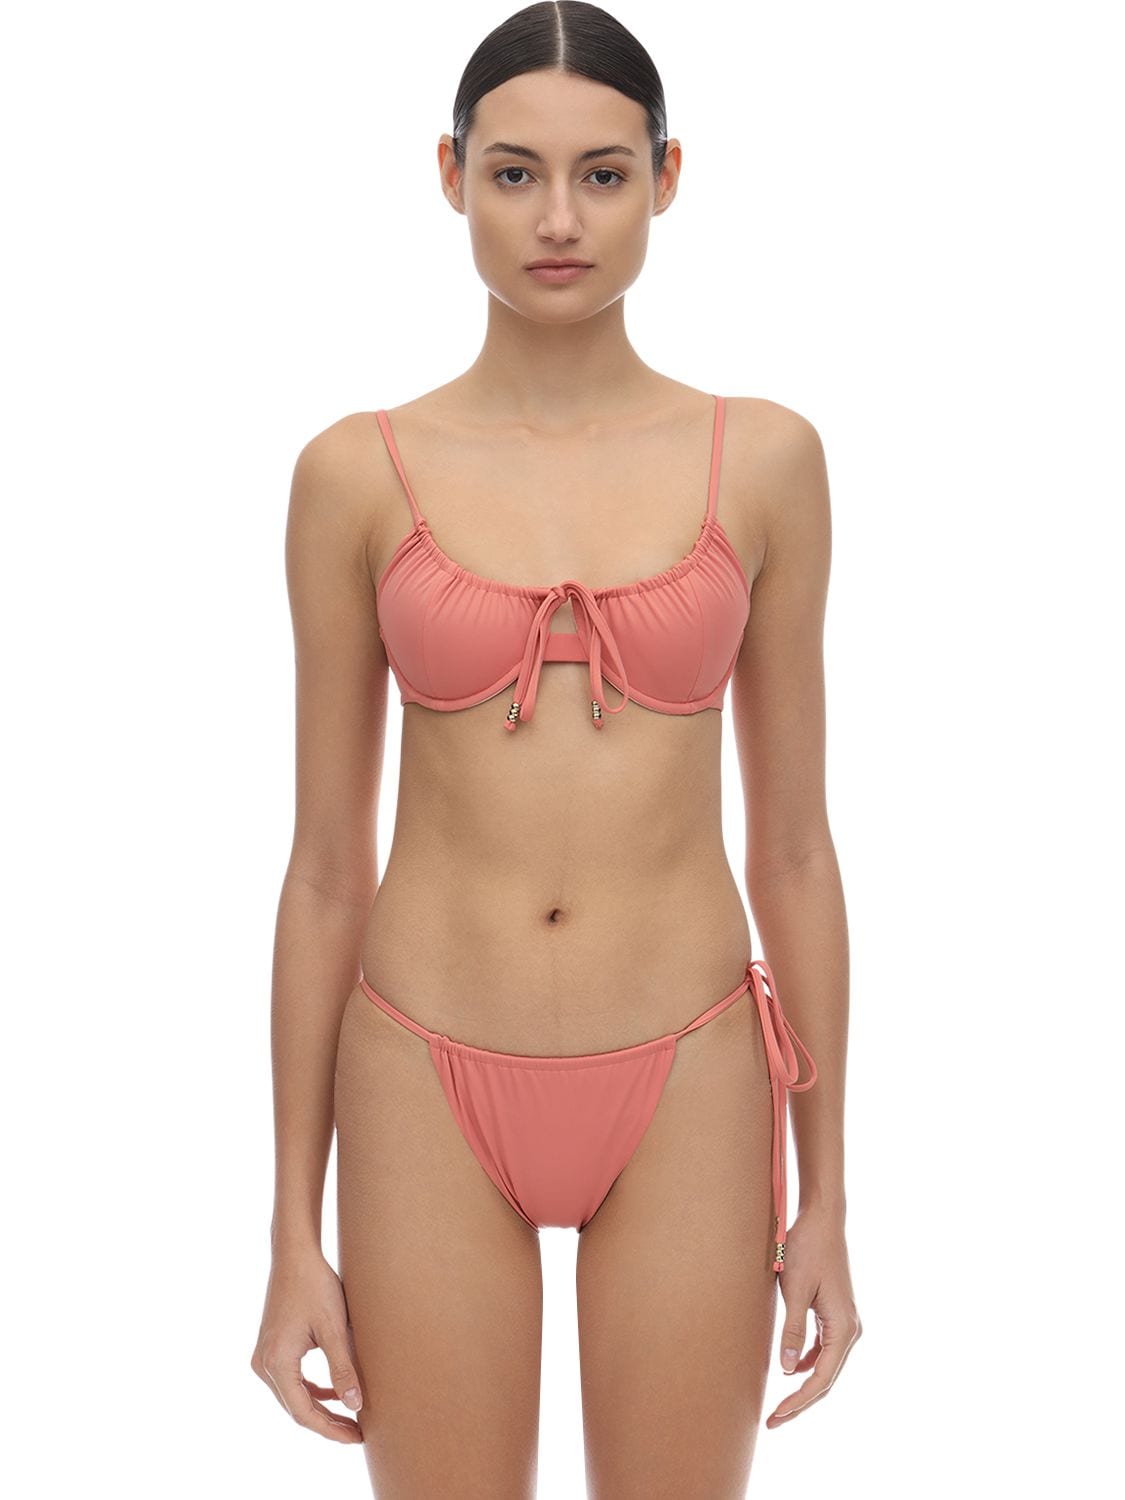 Palm Swim Viper Bikini Top W/ Underwire